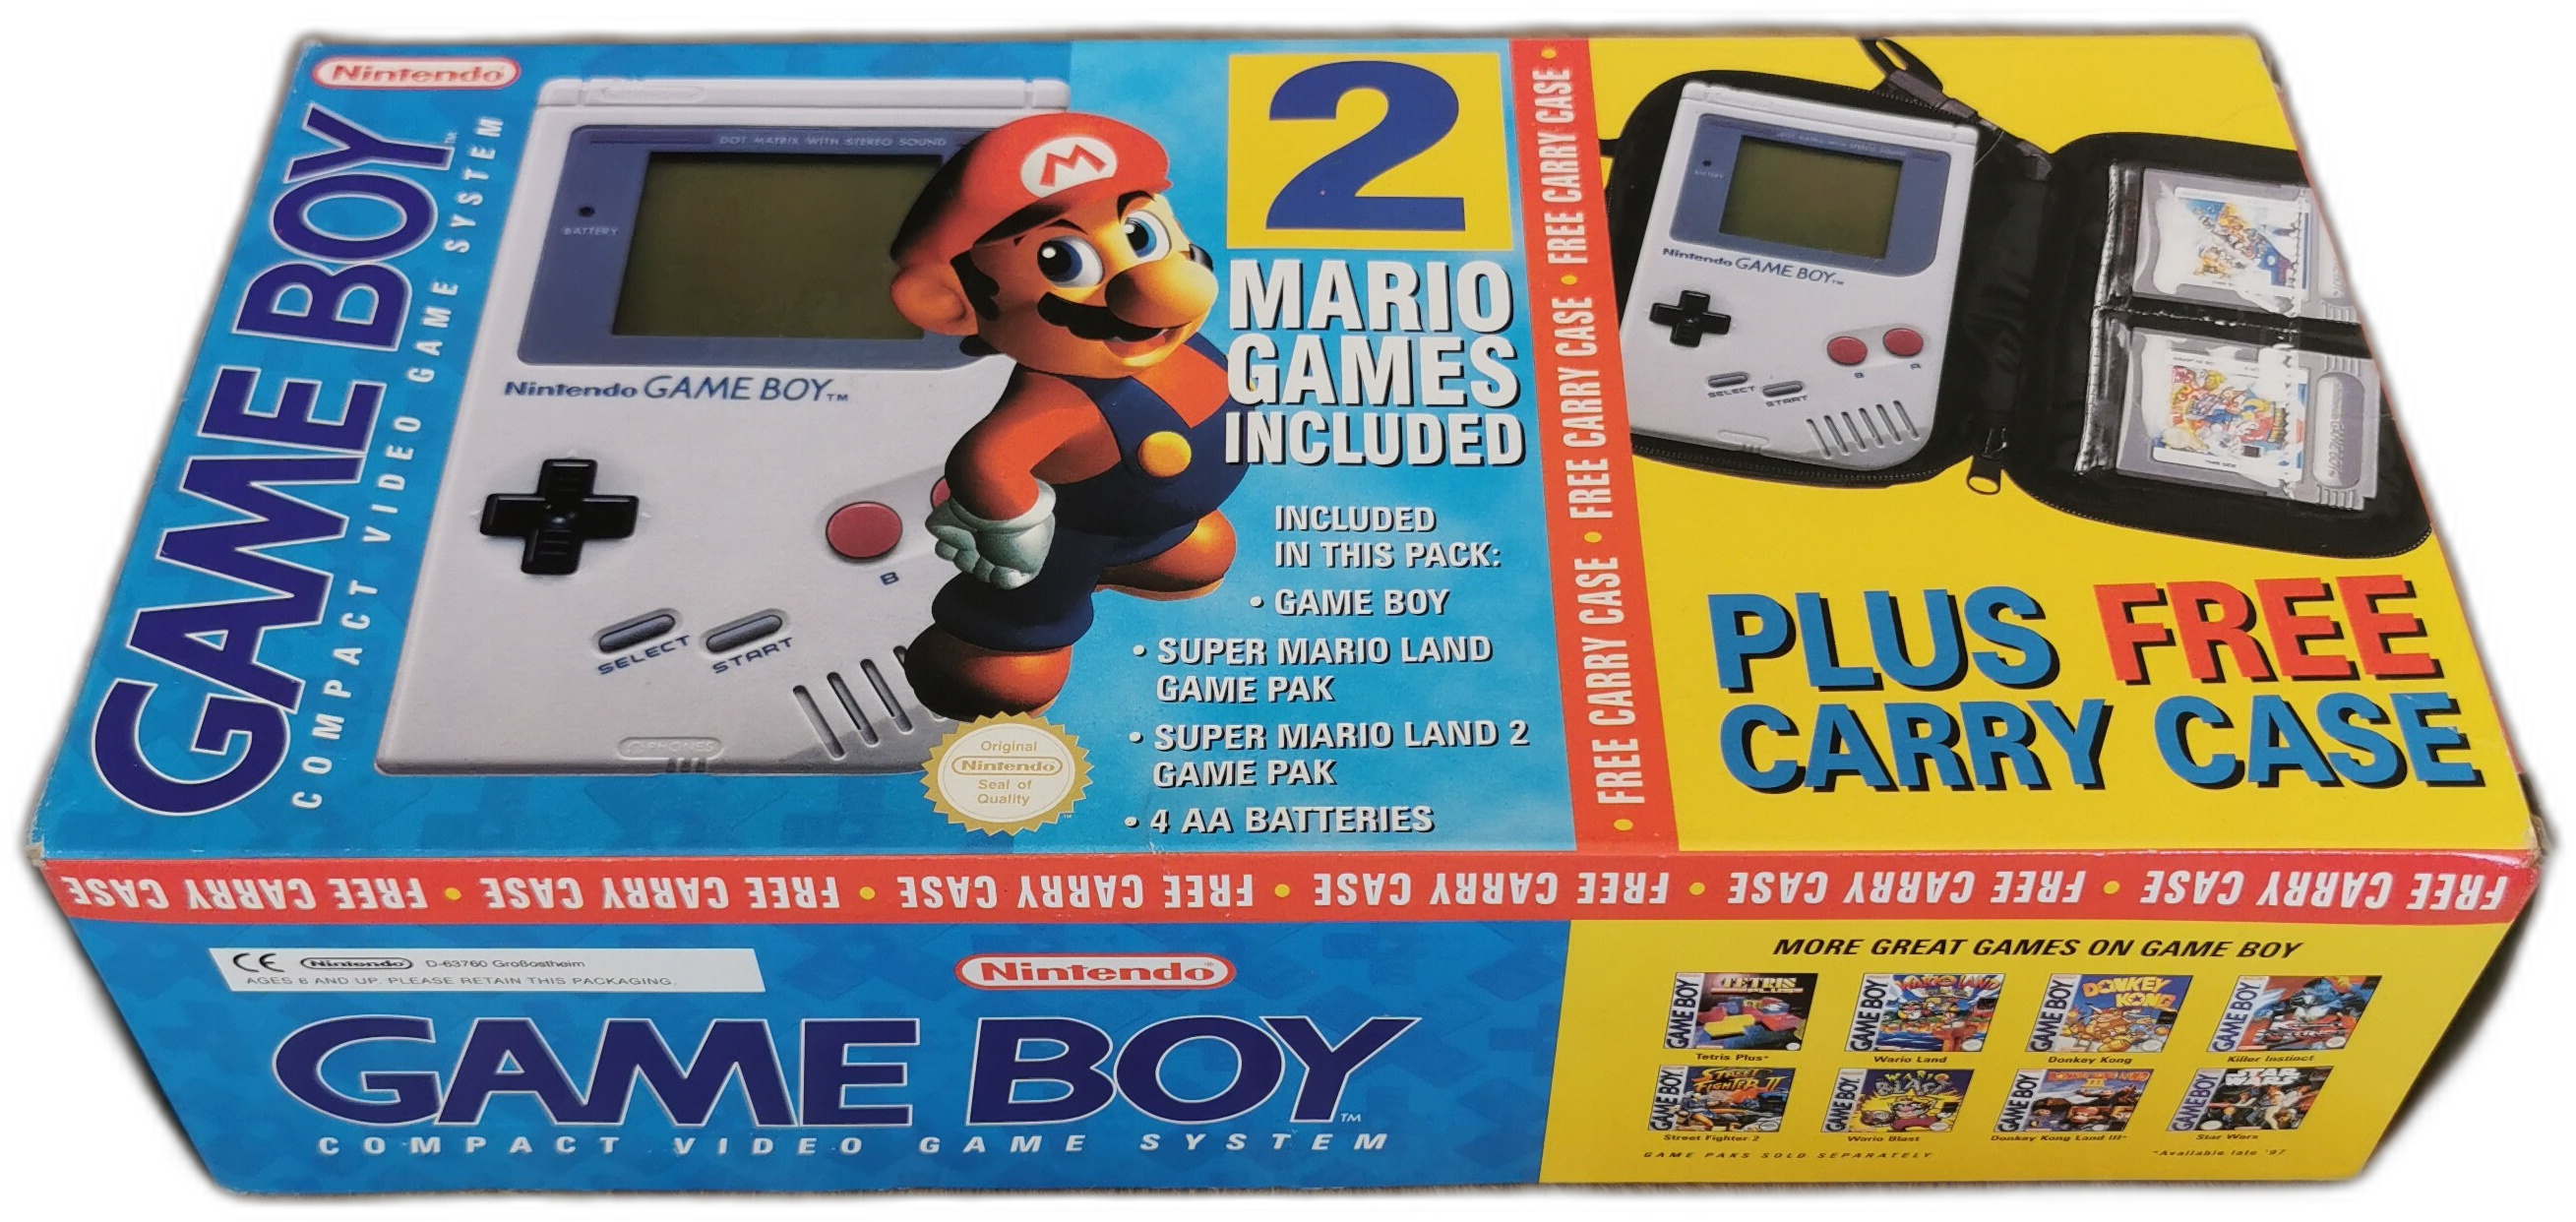  Nintendo Game Boy 2 Mario Games + Carry Case Bundle [UK]